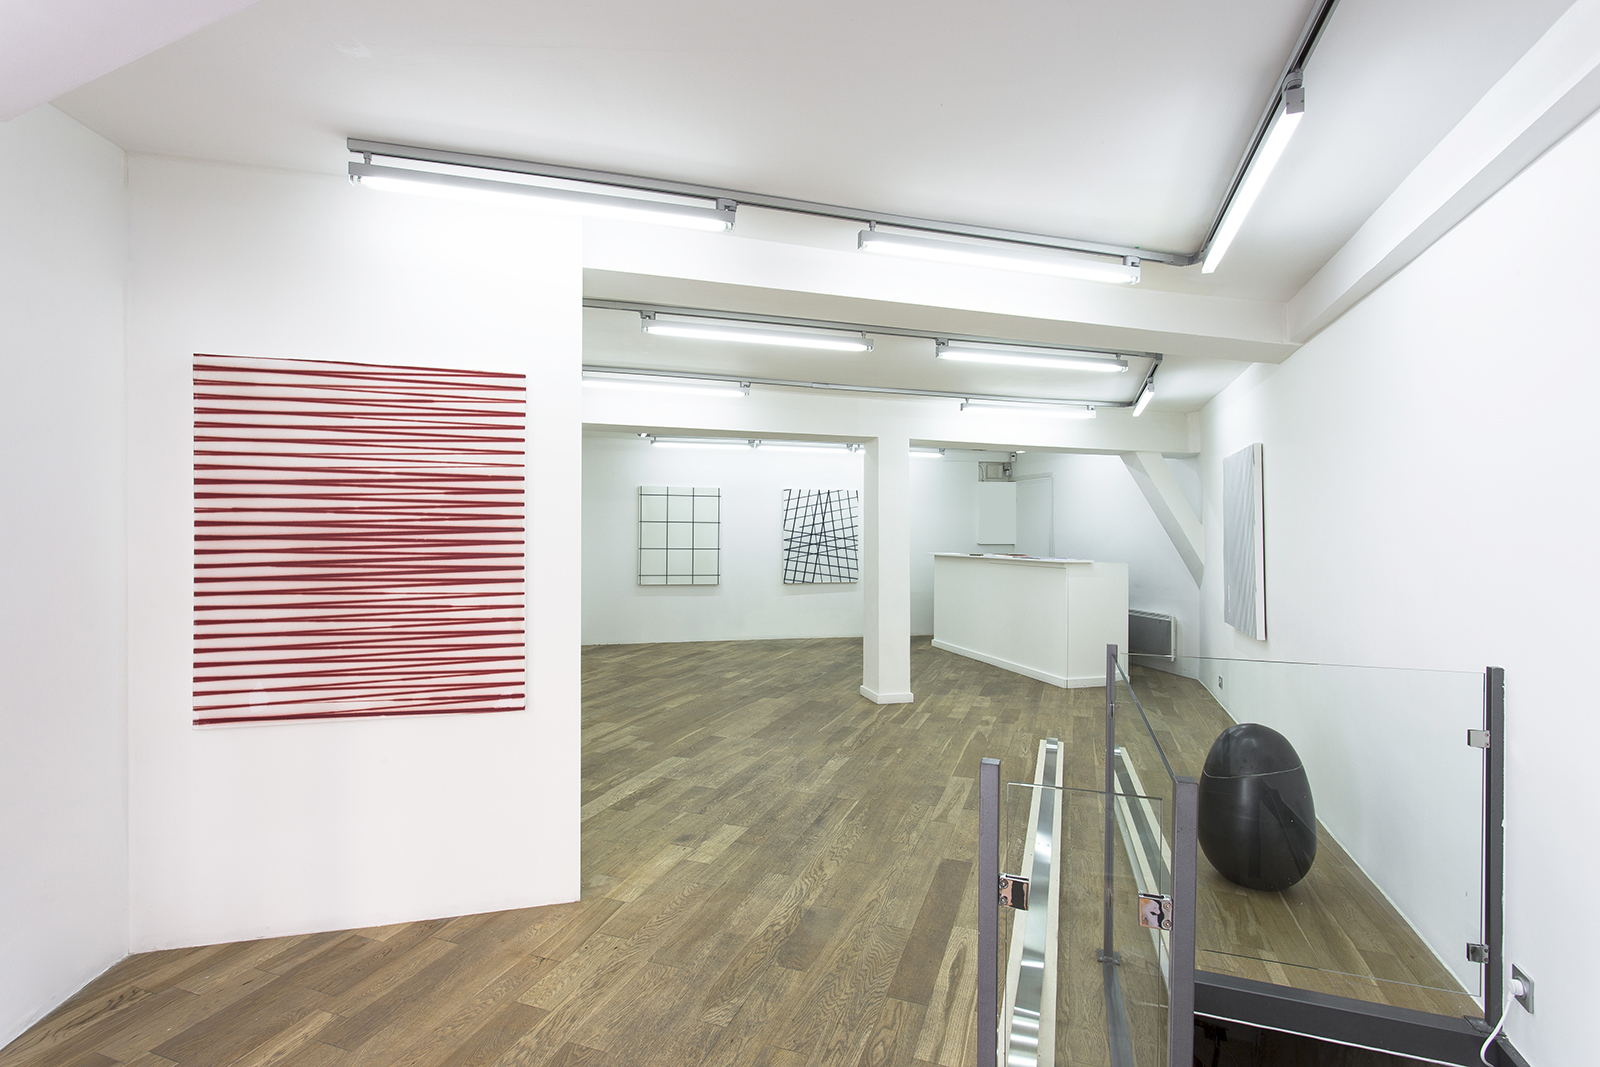 Tendency to movement, Thomas Baumann, exhibition view, June 2015